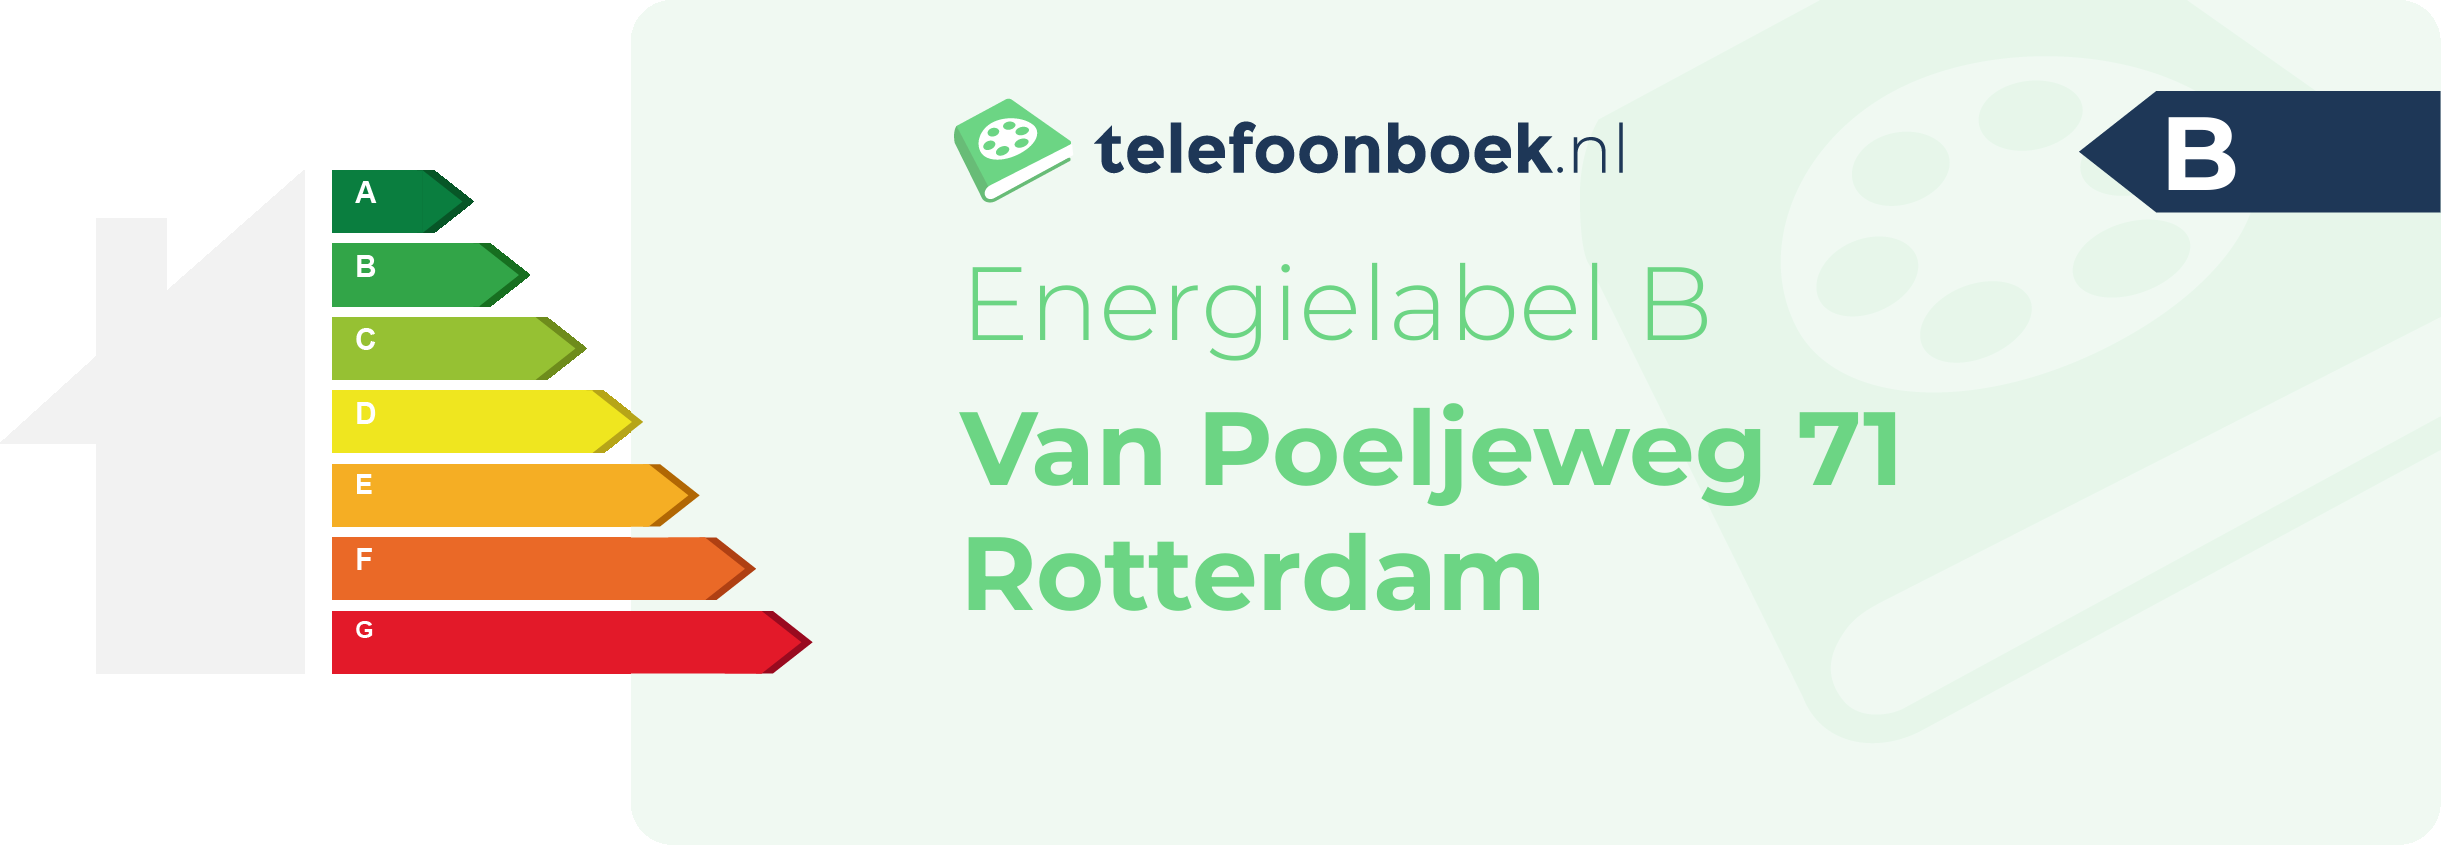 Energielabel Van Poeljeweg 71 Rotterdam